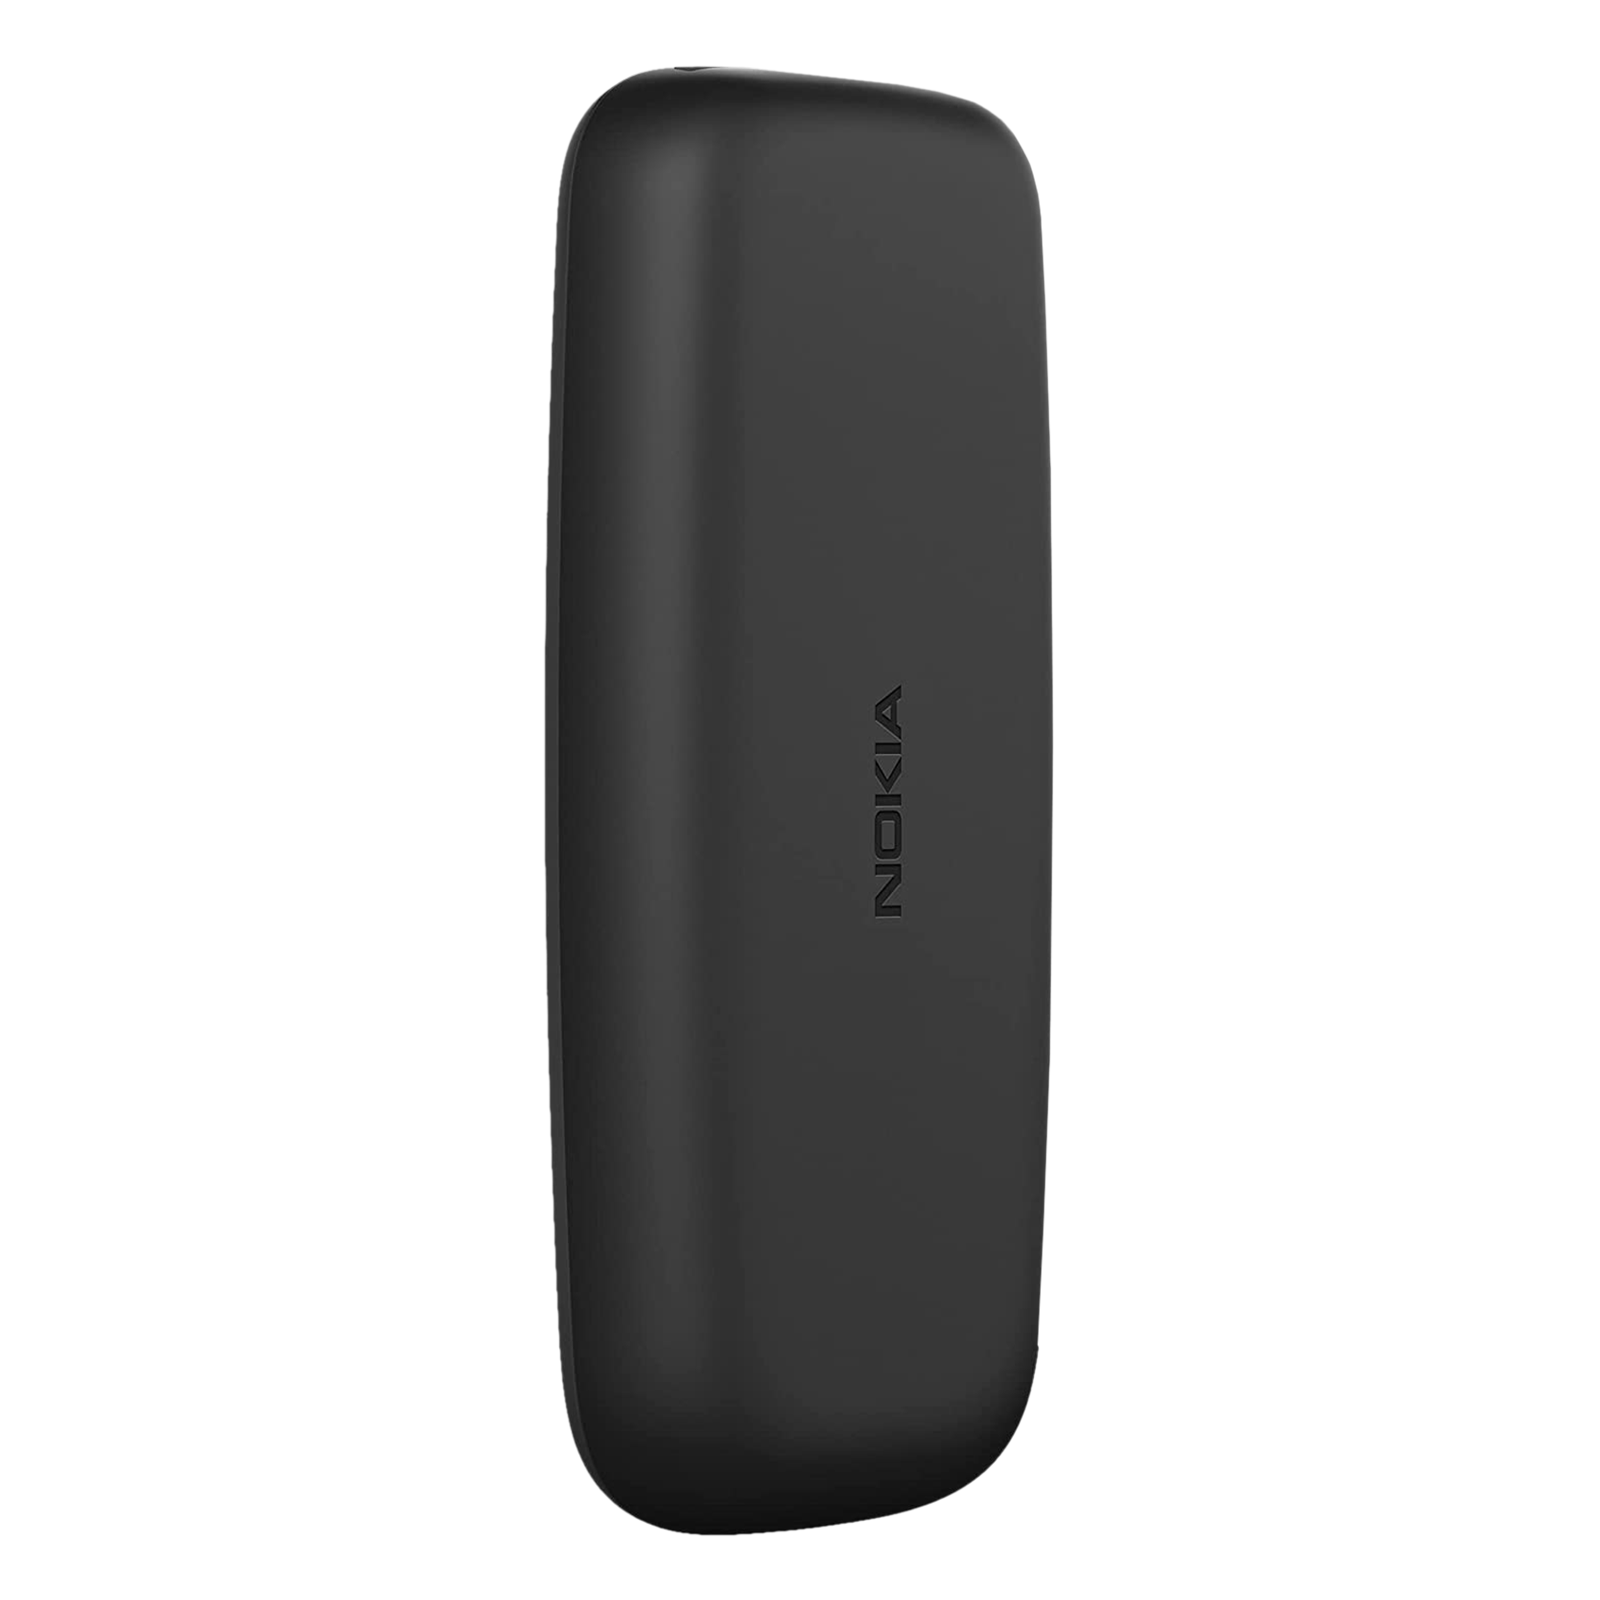 Nokia 105 Plus Single SIM (Charcoal Black)